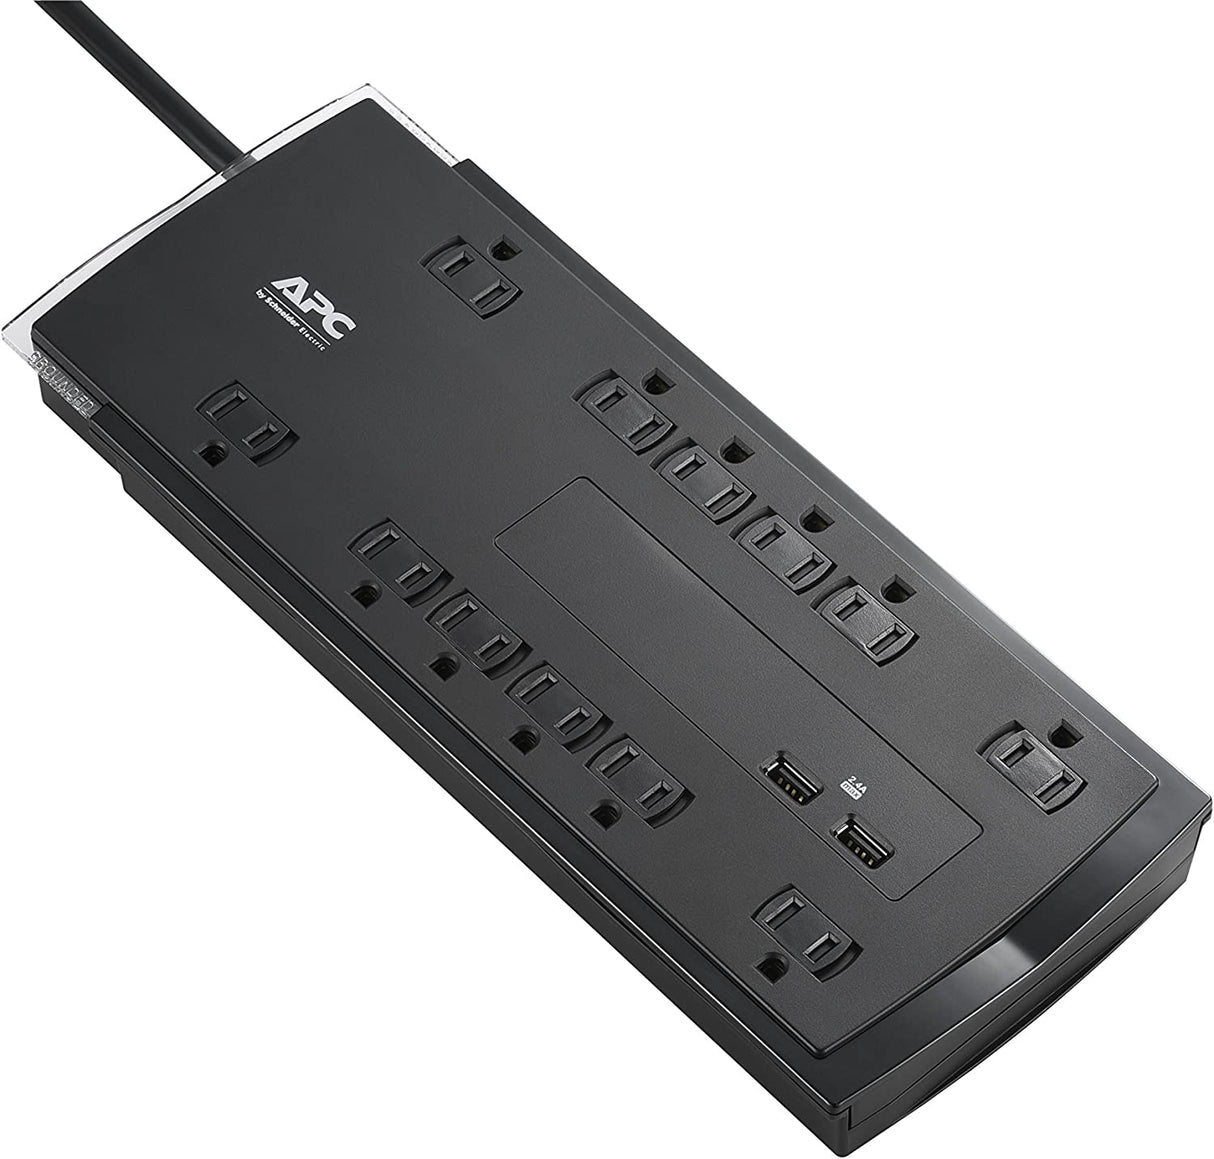 APC Surge Protector Power Strip with USB Ports, P12U2, 4320 Joule, 12 Outlet Surge Protector 12 Outlet Power Strip